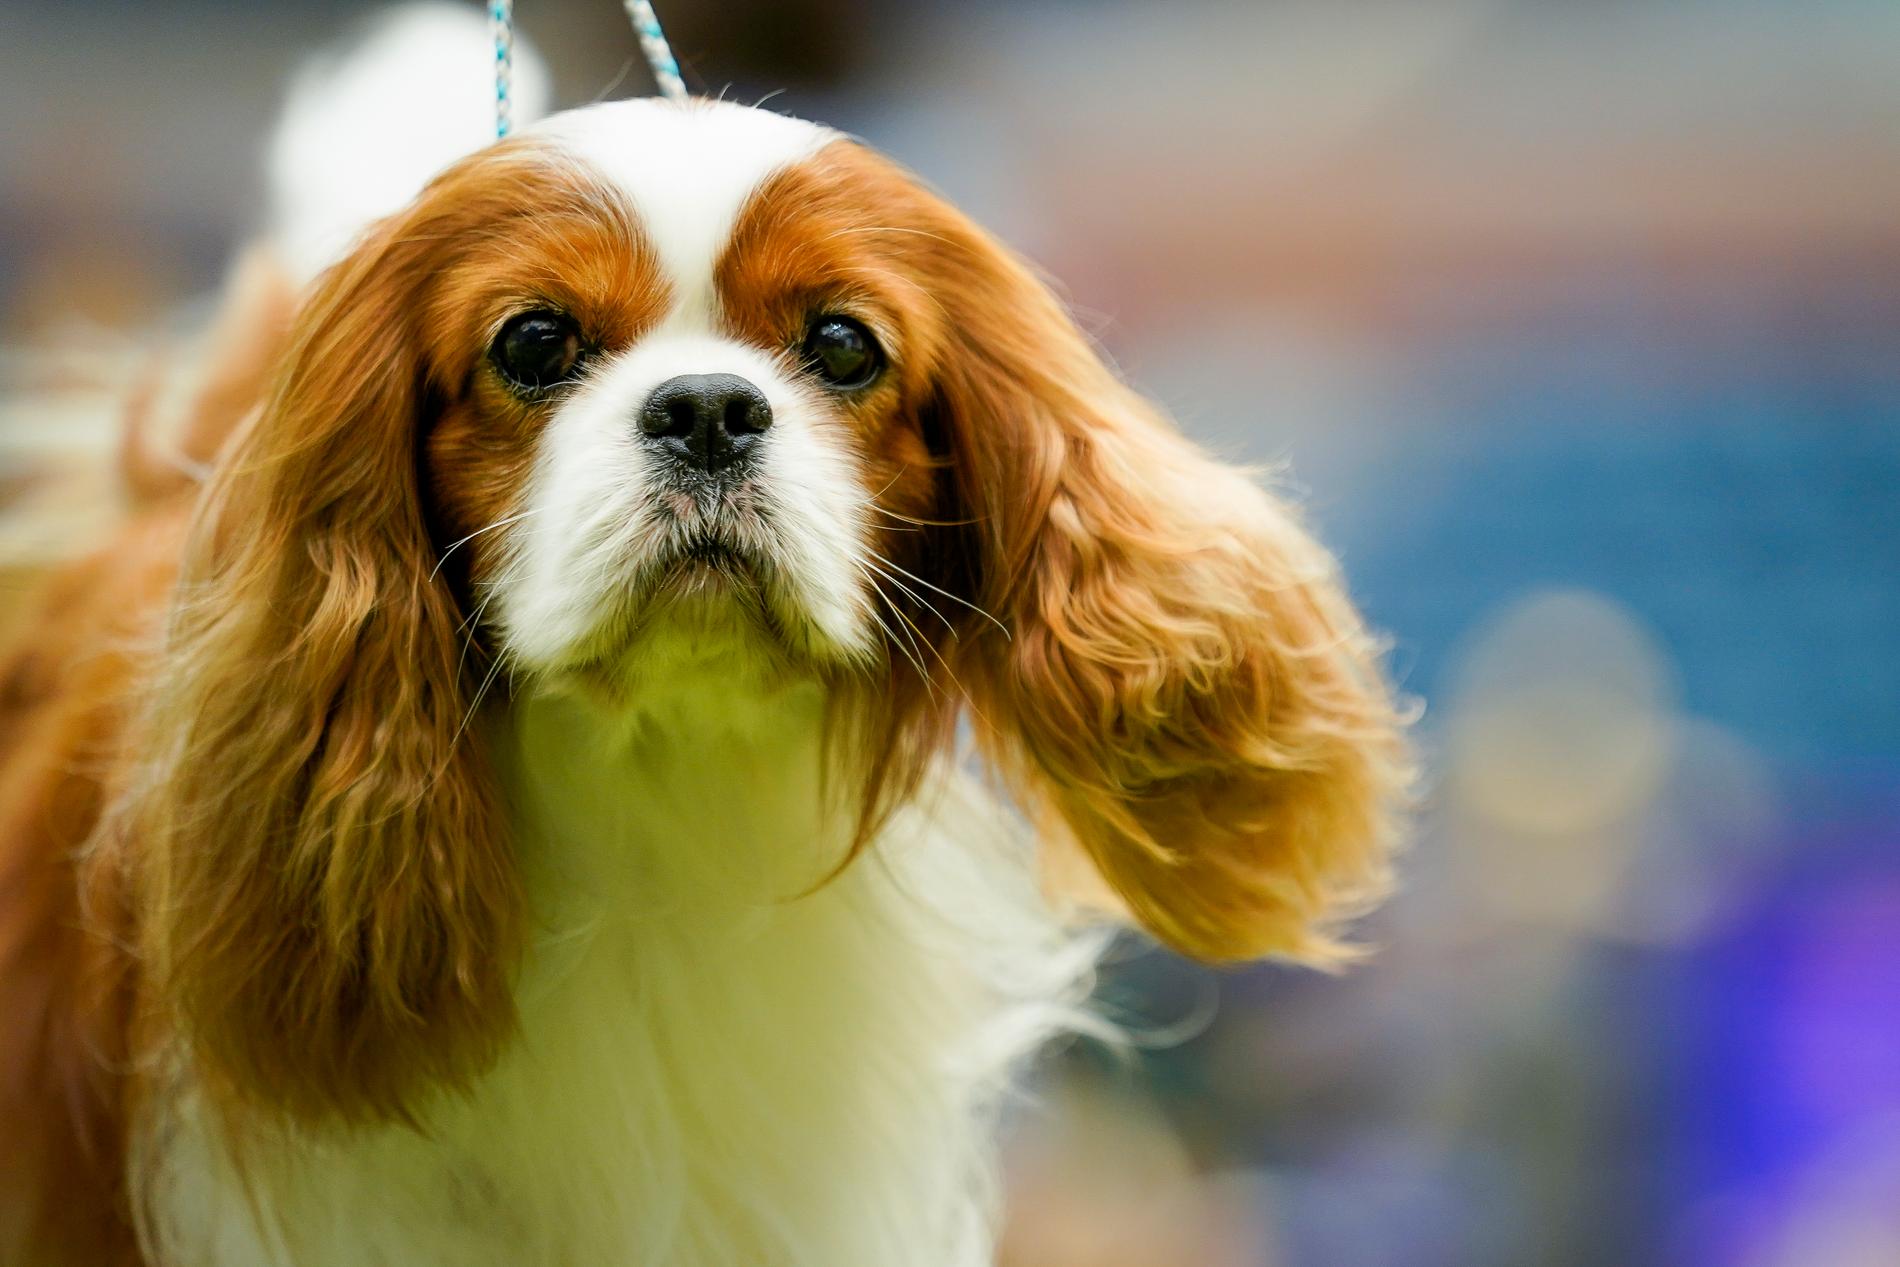 Supreme Court Rules Breeding Cavalier Dog Breed Violates Animal Welfare Act, Allows Breeding of English Bulldogs Under Specific Program